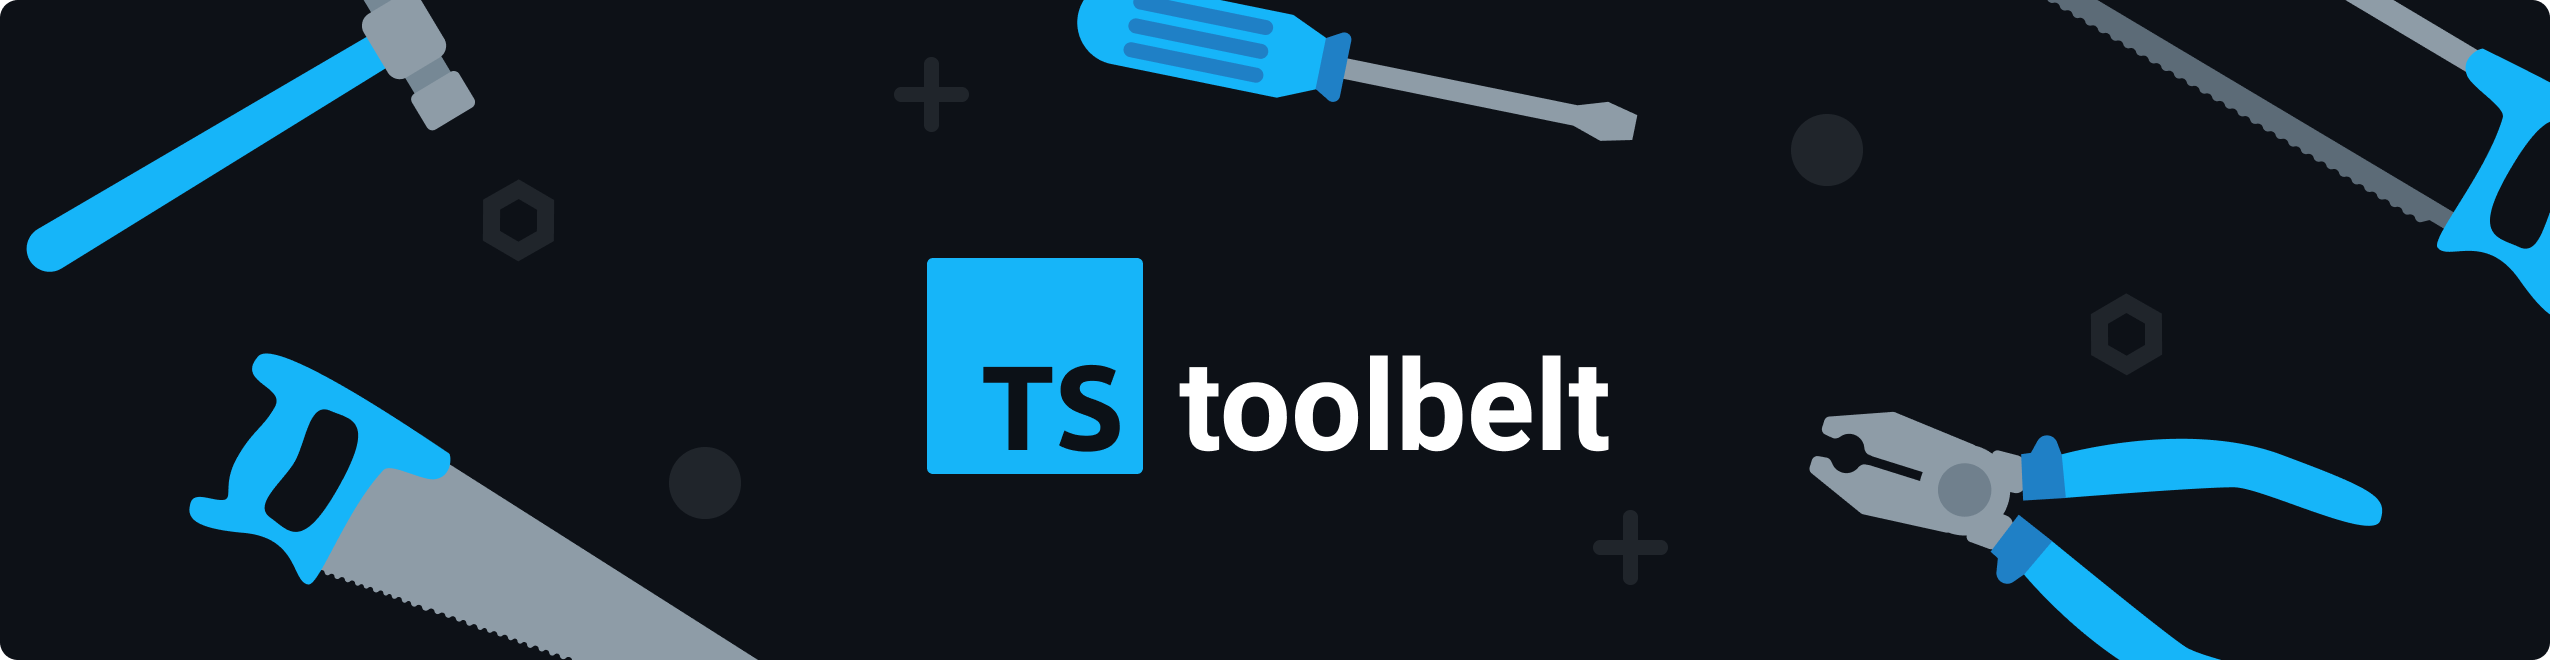 ts-toolbelt